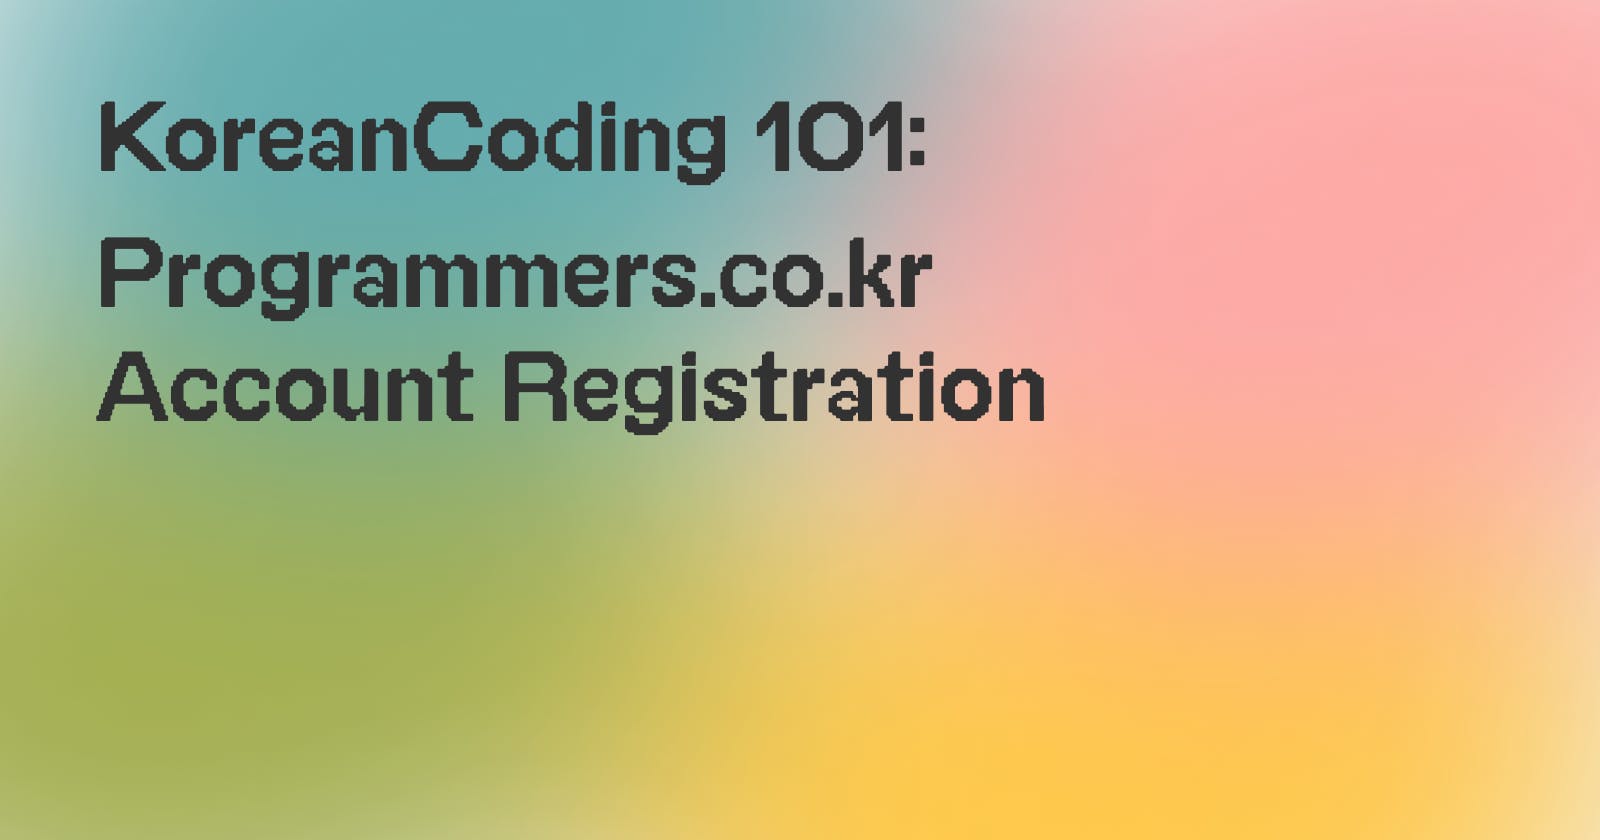 KoreanCoding 101: Programmers.co.kr Account Registration